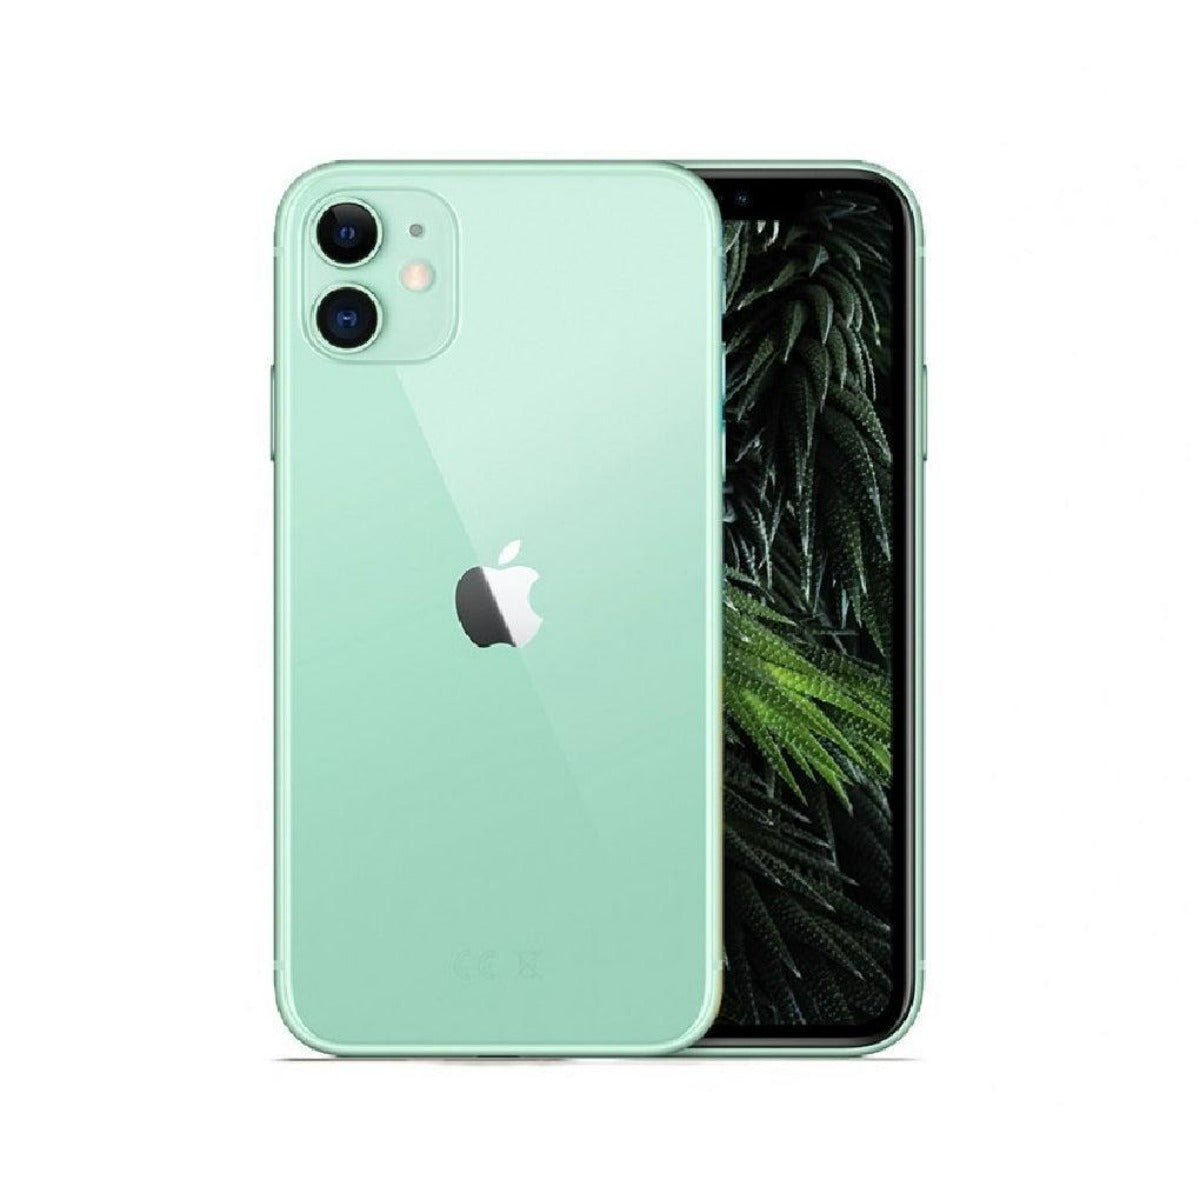 Apple iPhone 11 128GB Verde Reacondicionado Tipo A Apple iPhone 11